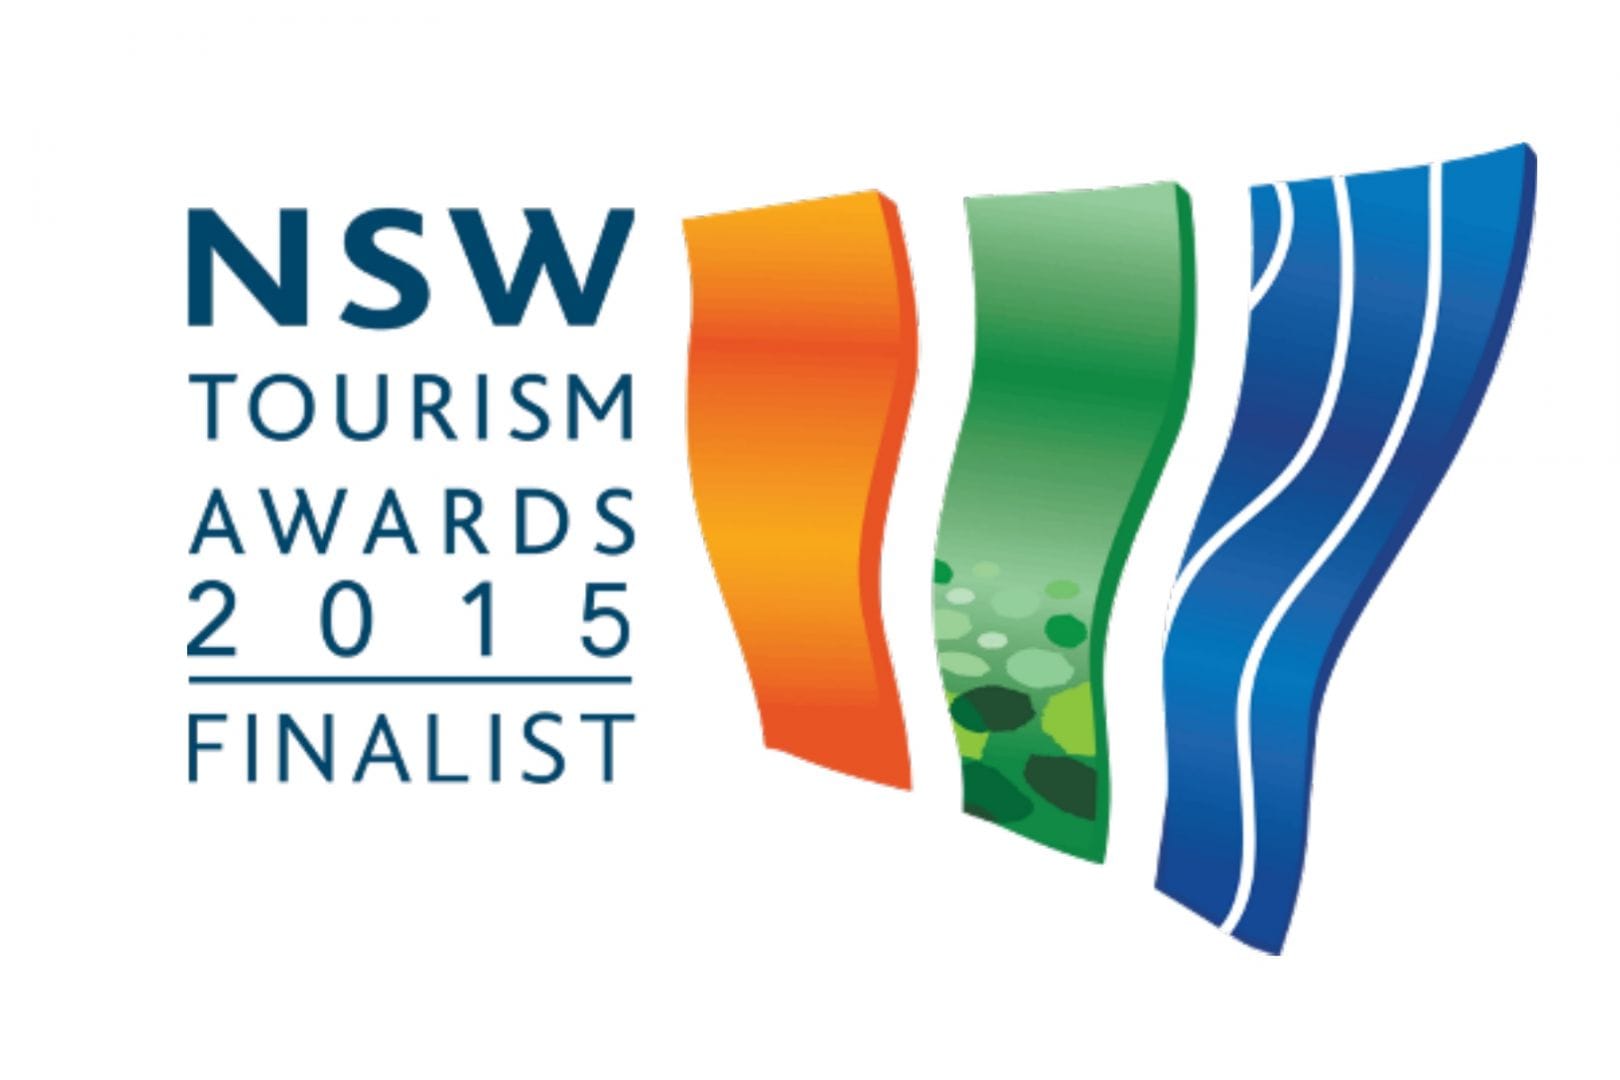 Tourism Awards 2015 Finalist